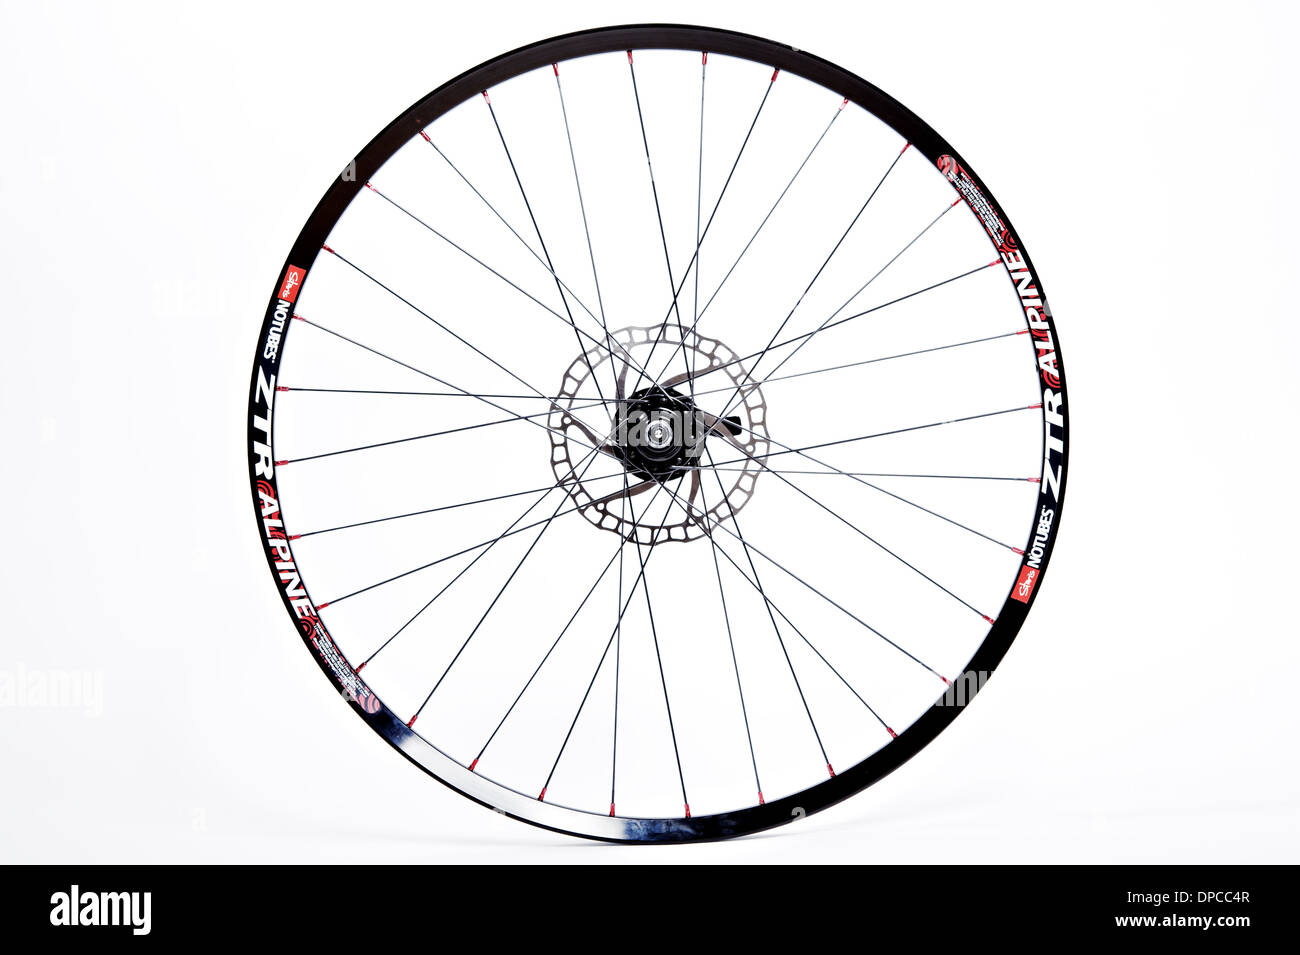 Bike wheel on the rim ZTR Alpine Stock Photo